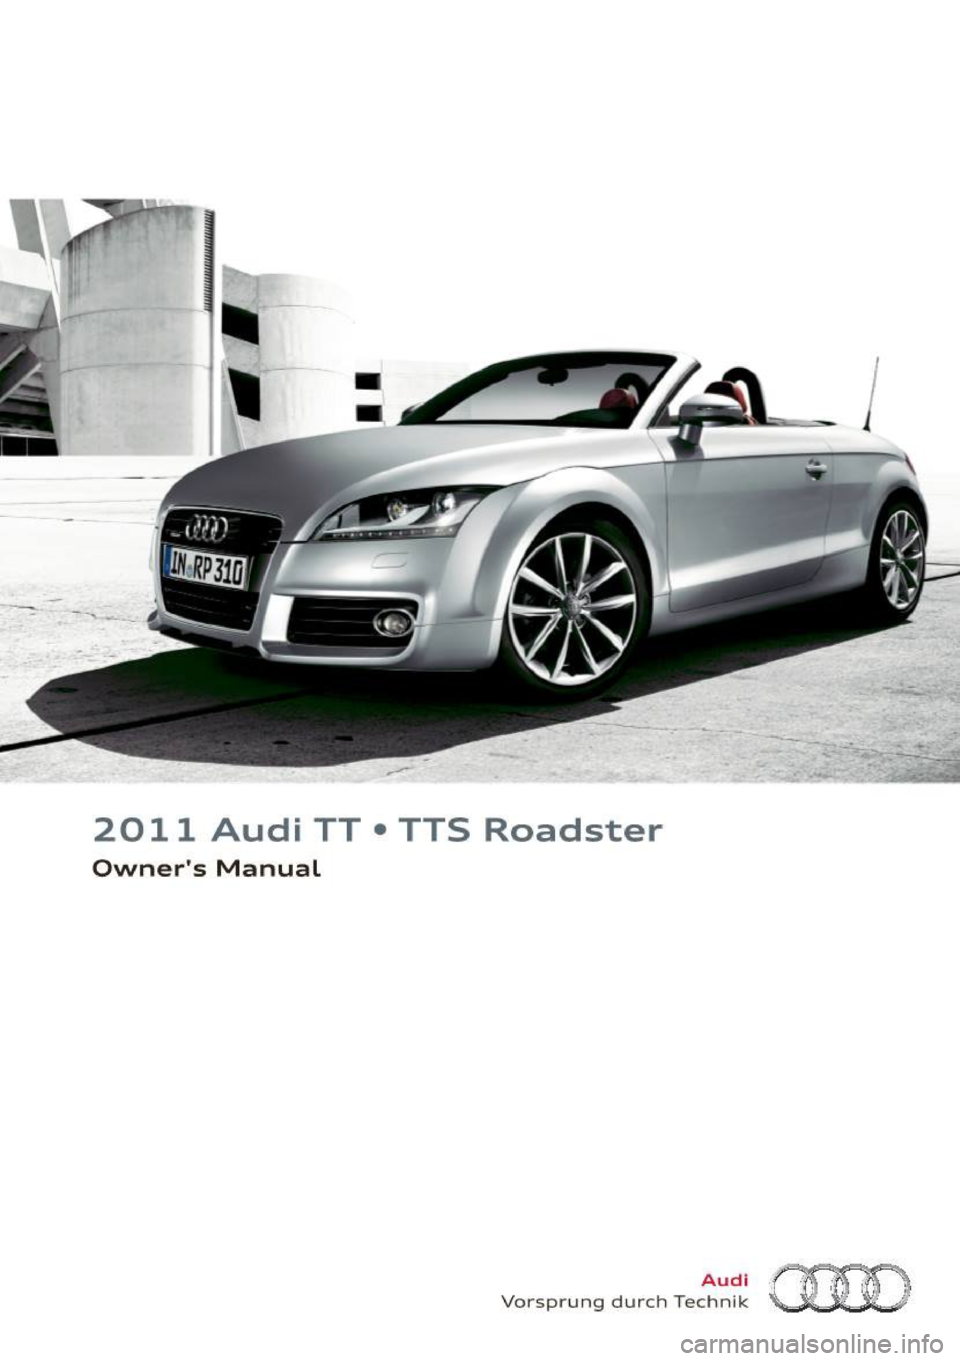 AUDI TT ROADSTER 2011  Owners Manual --
2011  Audi  TT•  TTS  Roadster 
Owners  Manual 
Audi 
Vorsprung  durch  Technik 
-· -- 